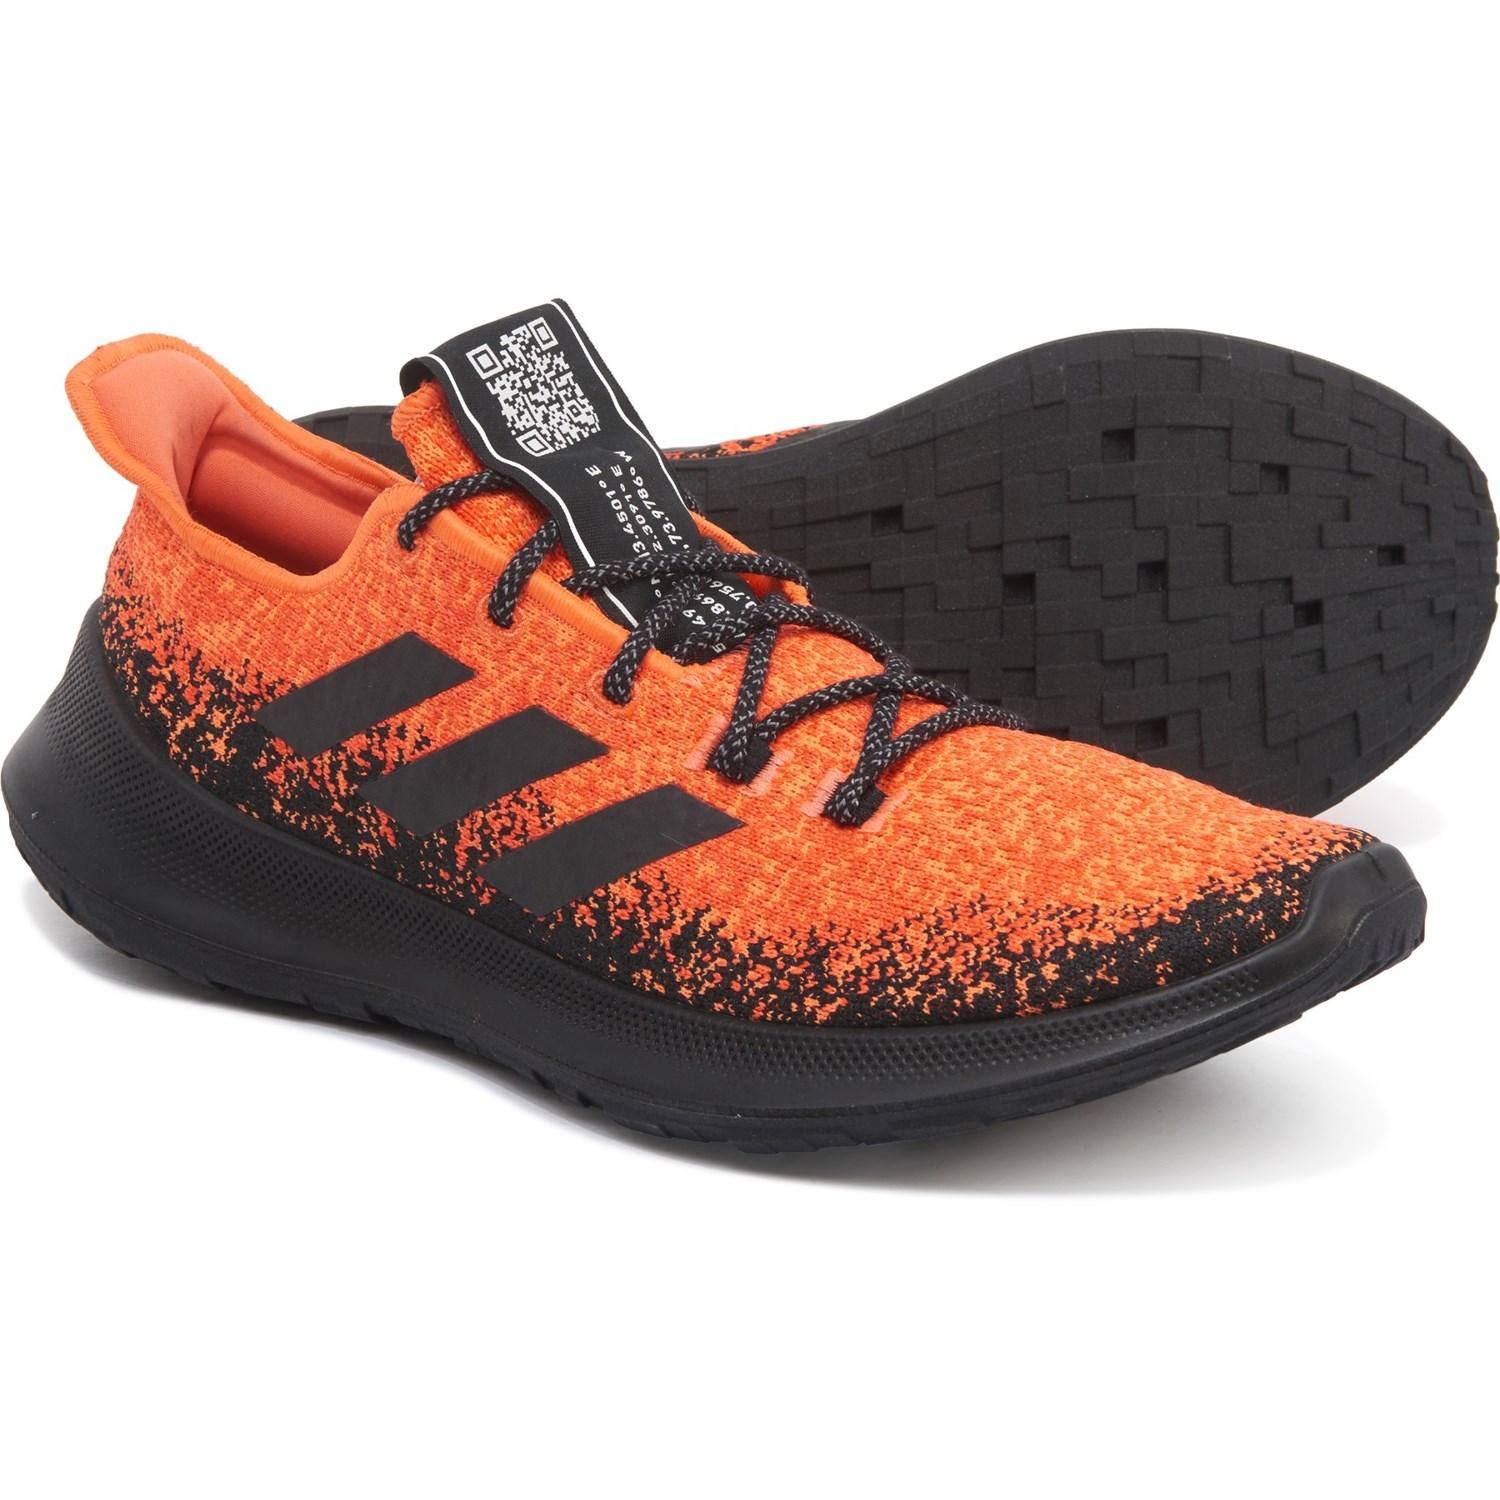 adidas running shoes orange and black